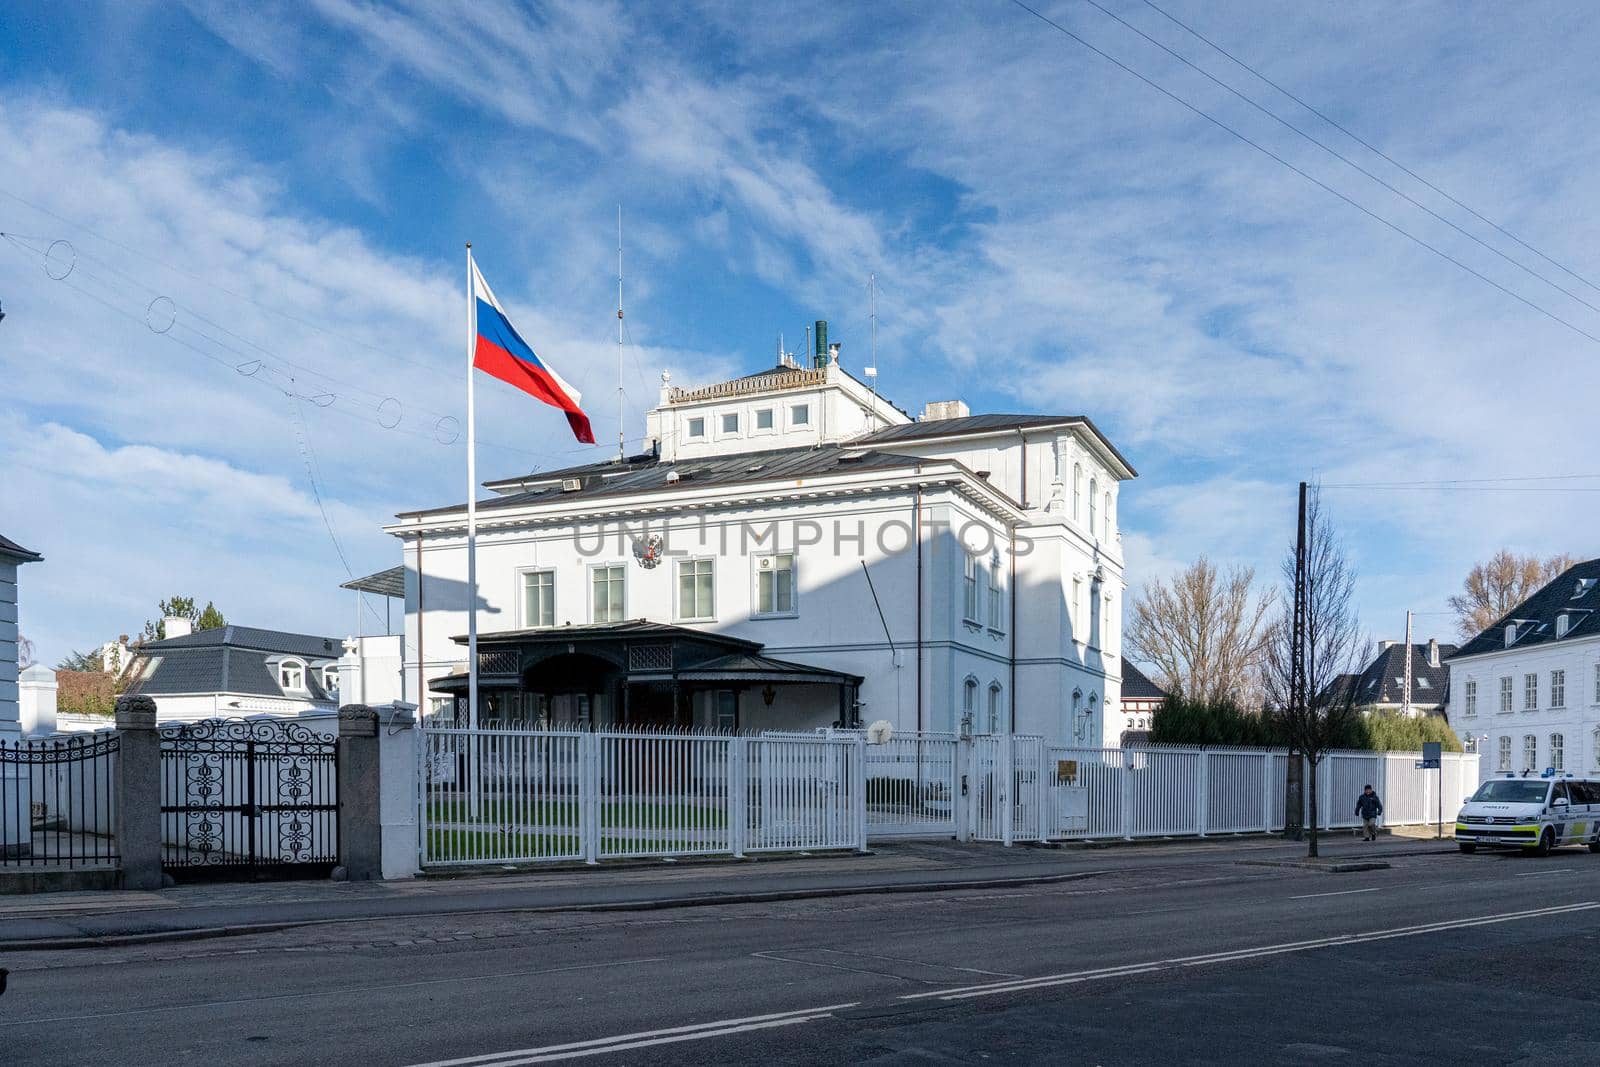 Copenhagen, Denmark. - March 1, 2022: Exterior view of the Embassy of Russia.